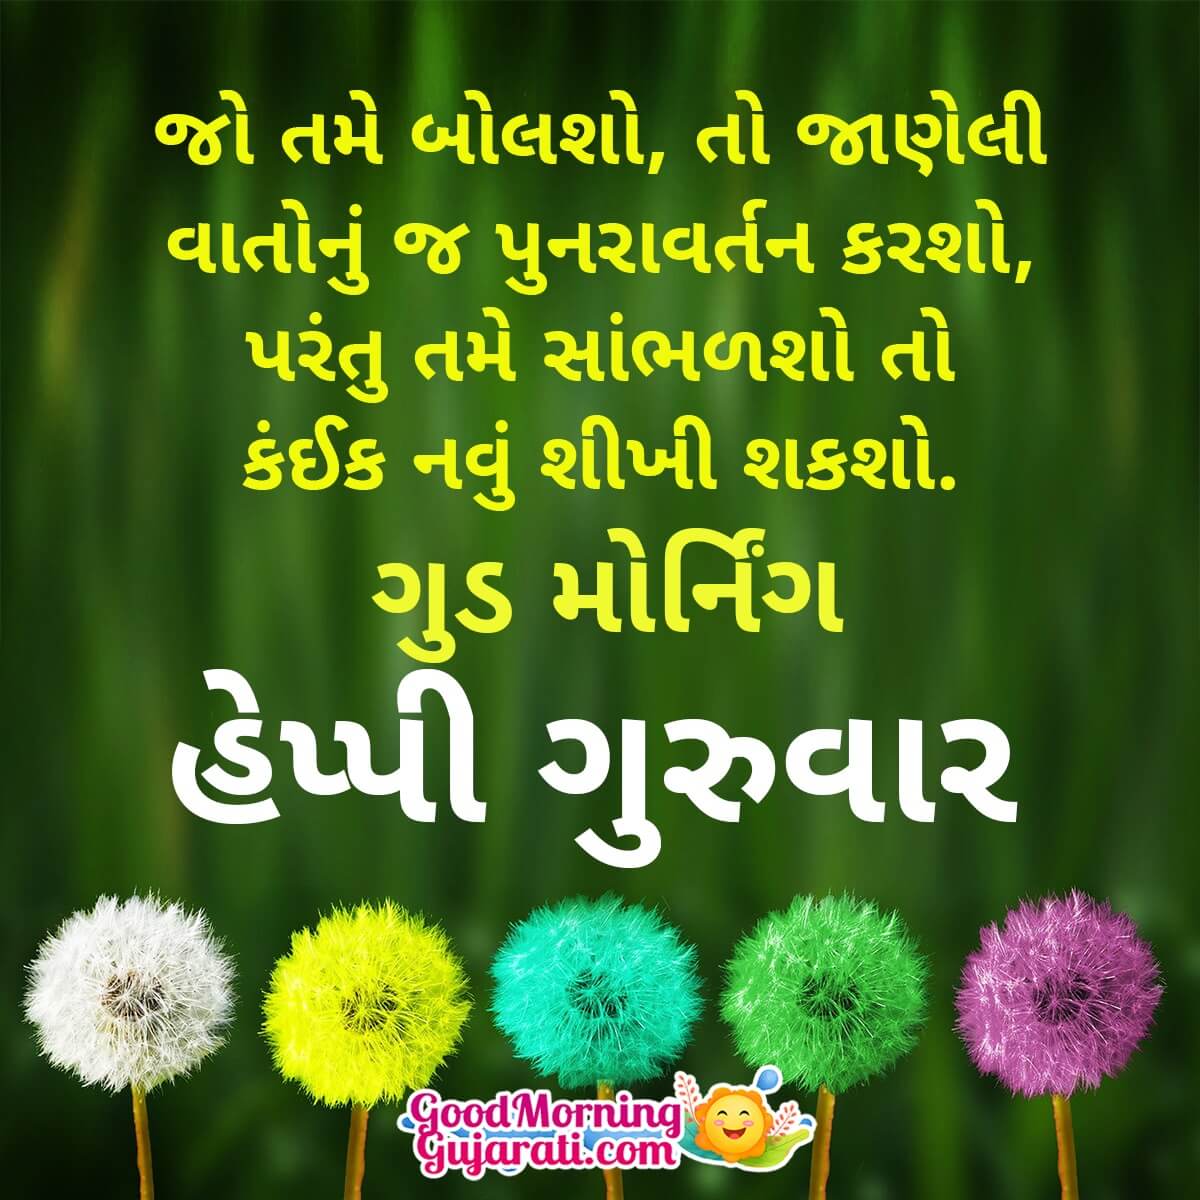 Good Morning Happy Guruvar Message